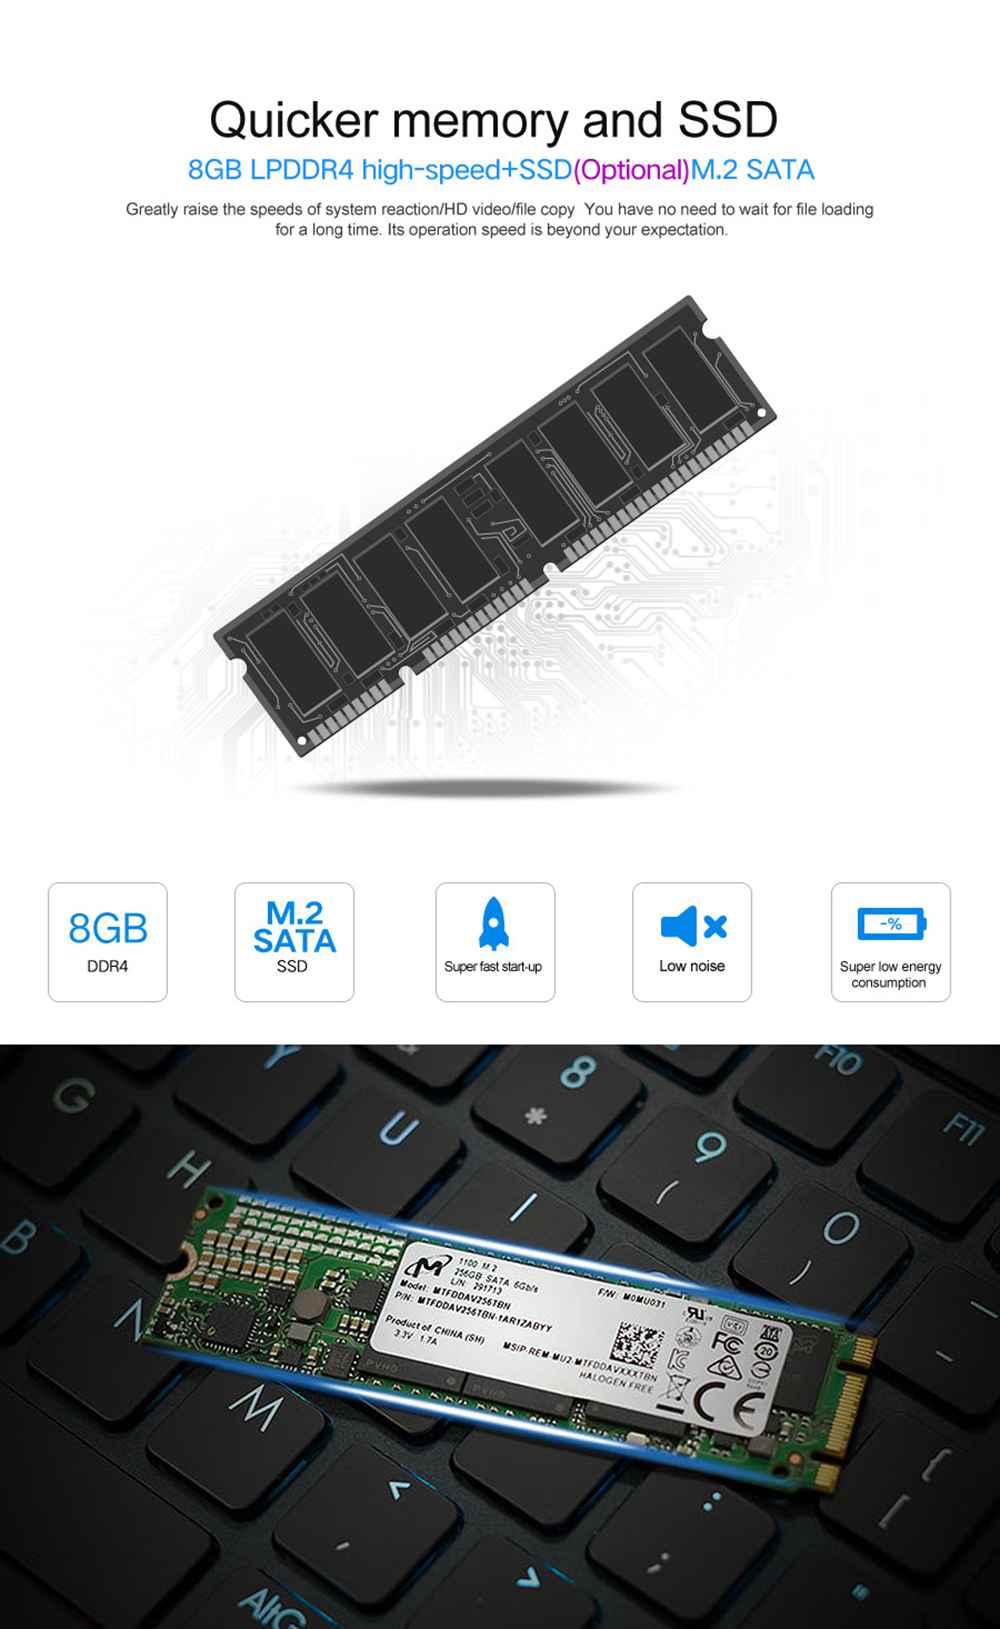 Cenava P151 Laptop Intel Celeron J3455 Quad Core 15.6" 1920*1080 Windows 10 8GB RAM 256GB SSD - Silver